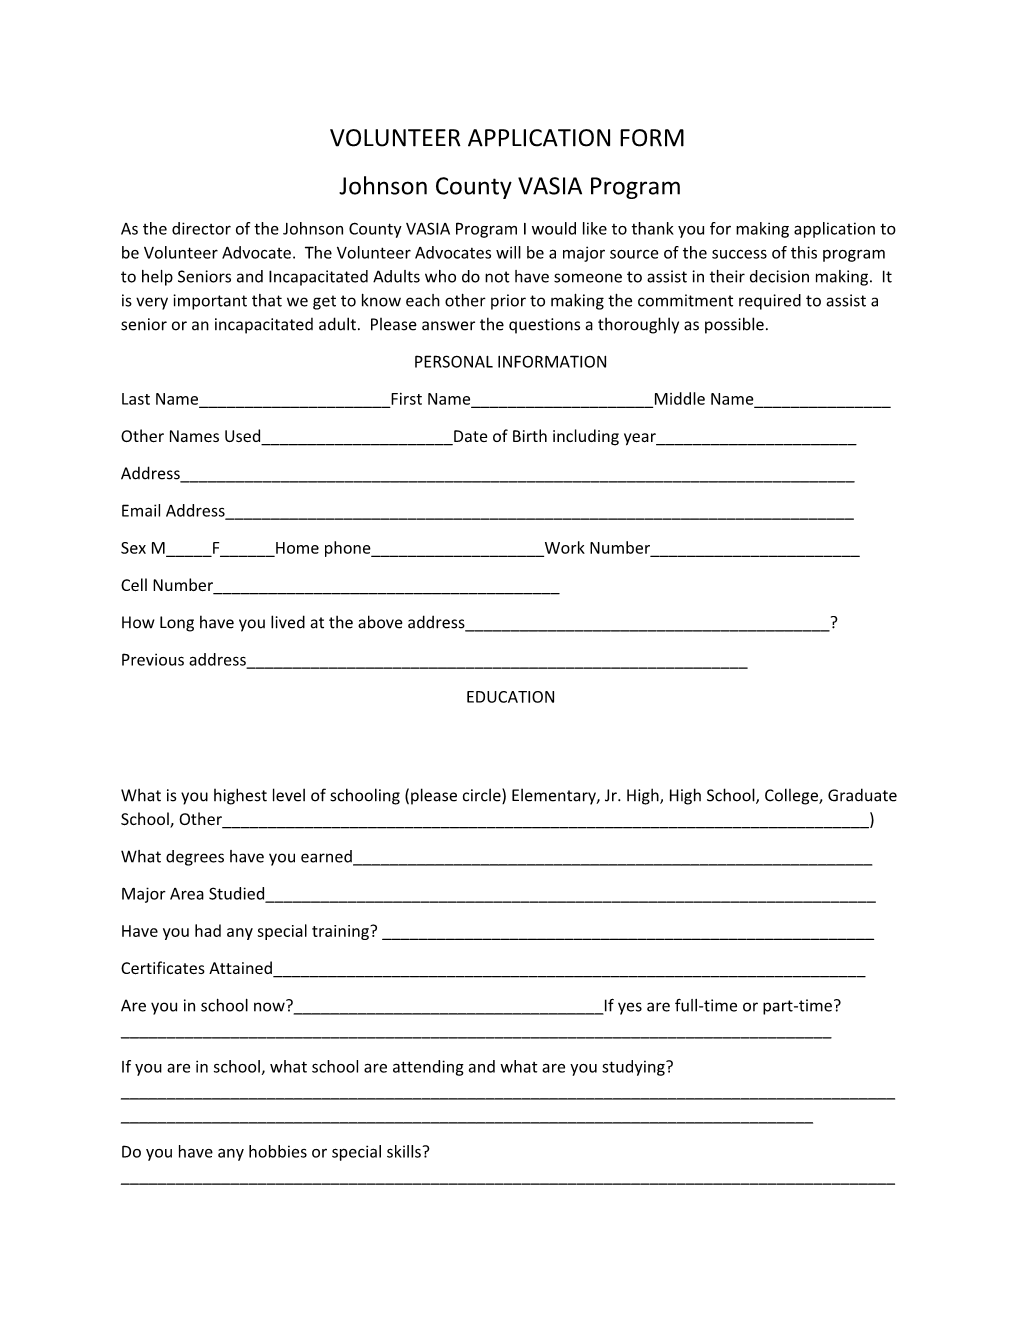 Johnson County VASIA Program